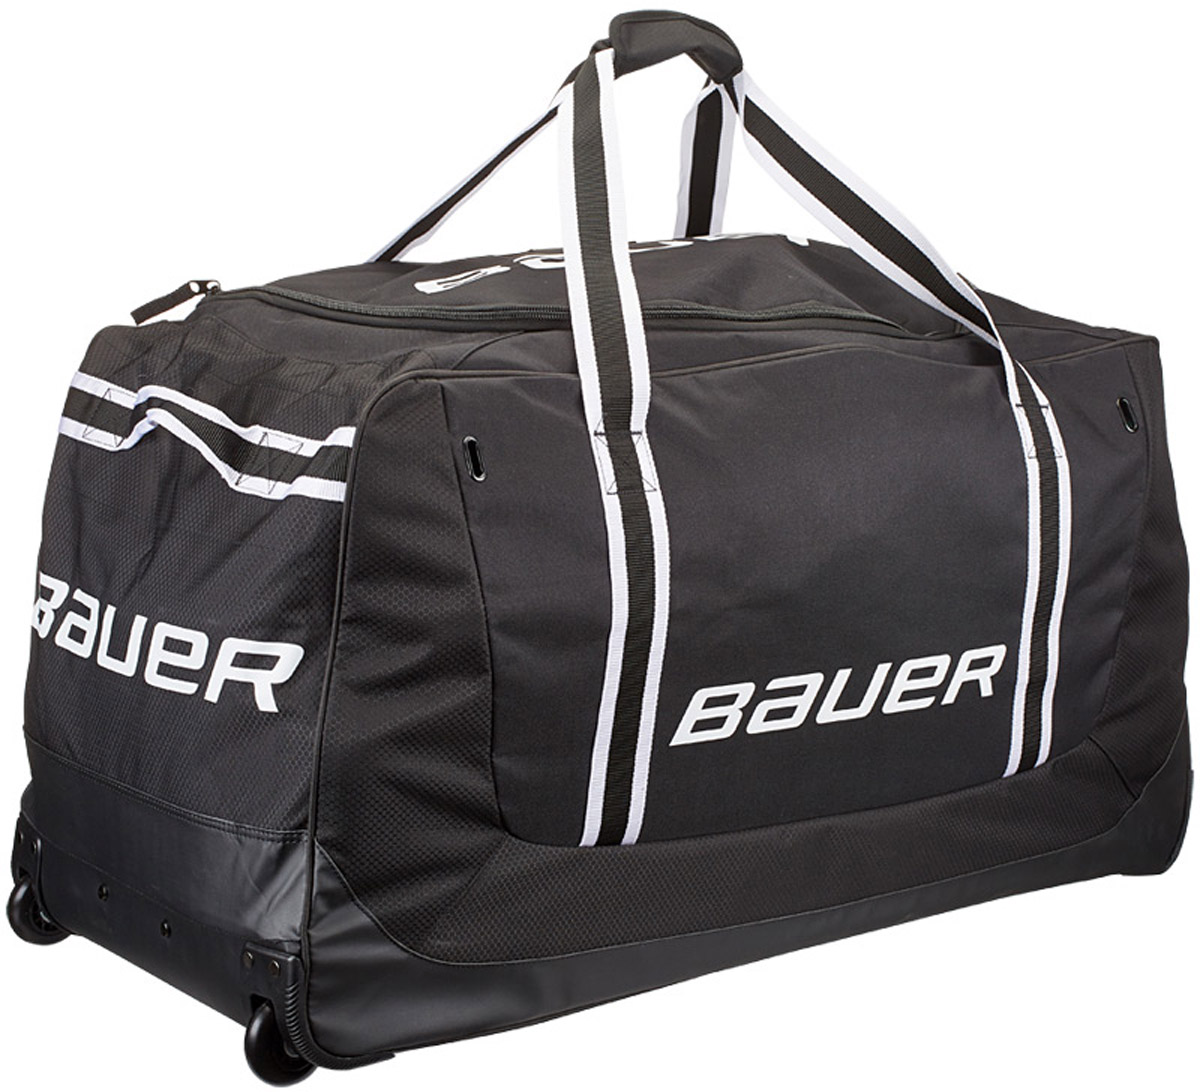 Hockey bag with wheels